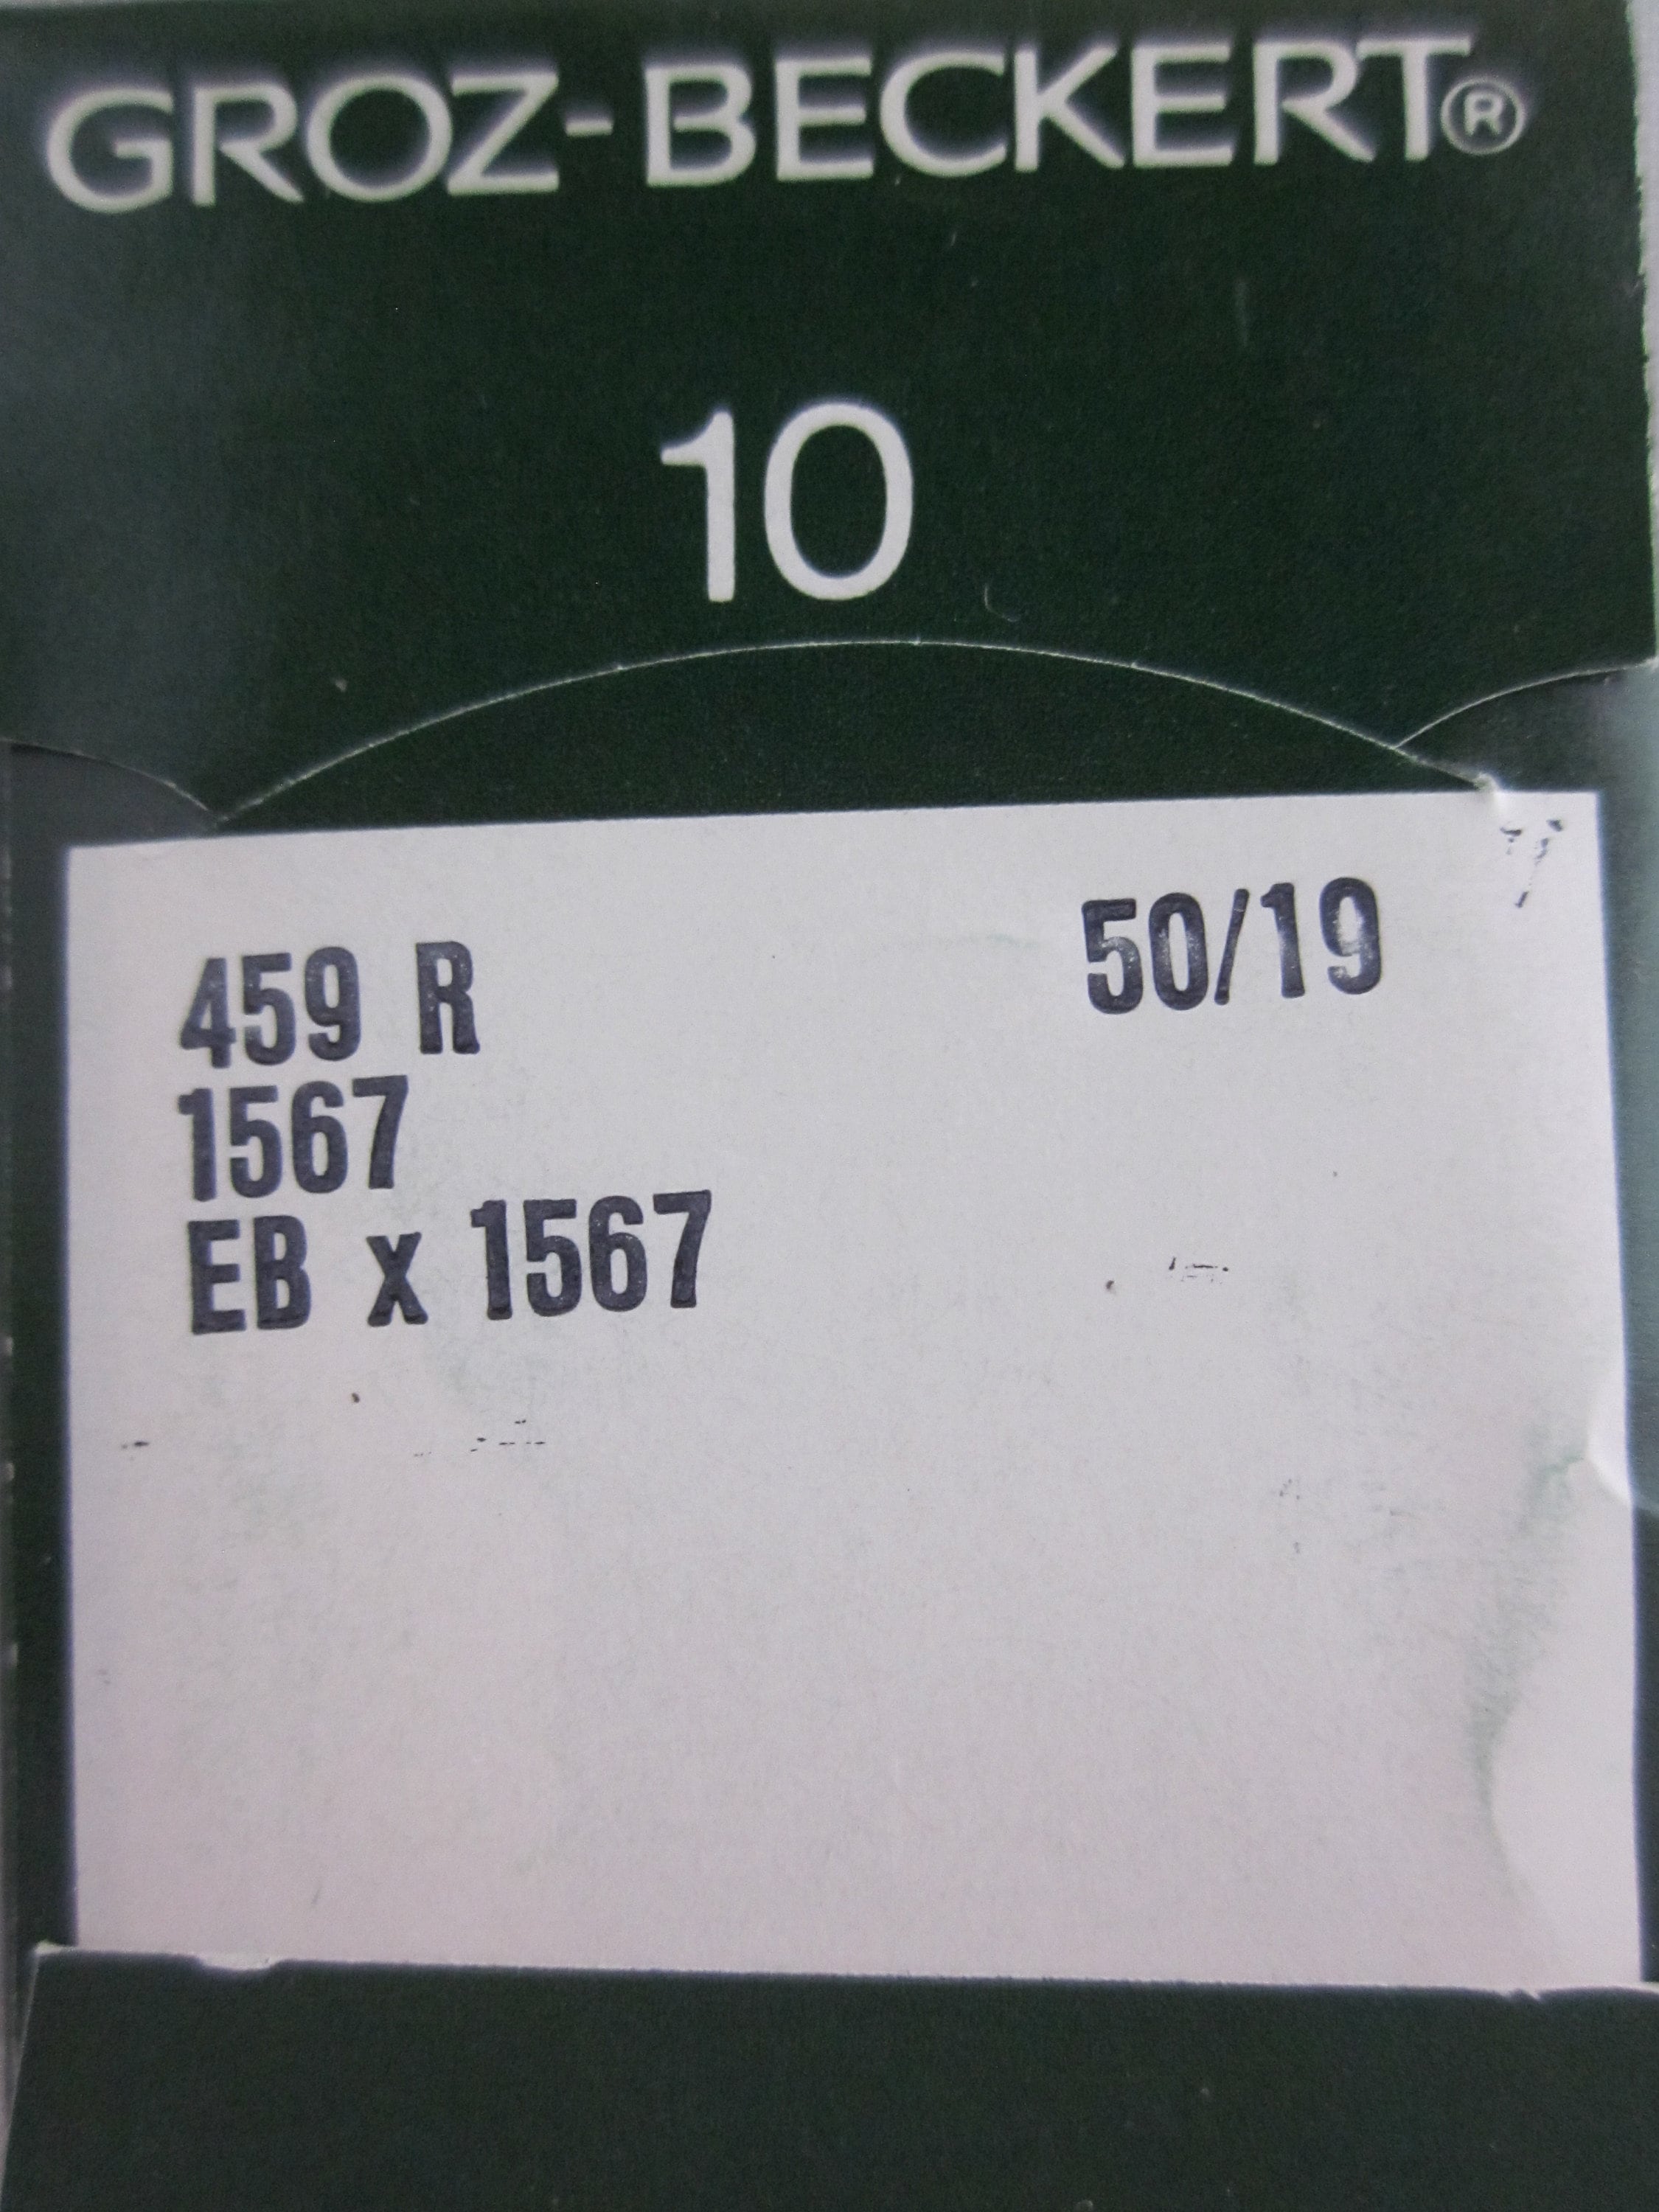 135x17 Walking Foot Industrial Sewing Needles Size 110/18 10 Pack  Groz-Beckert